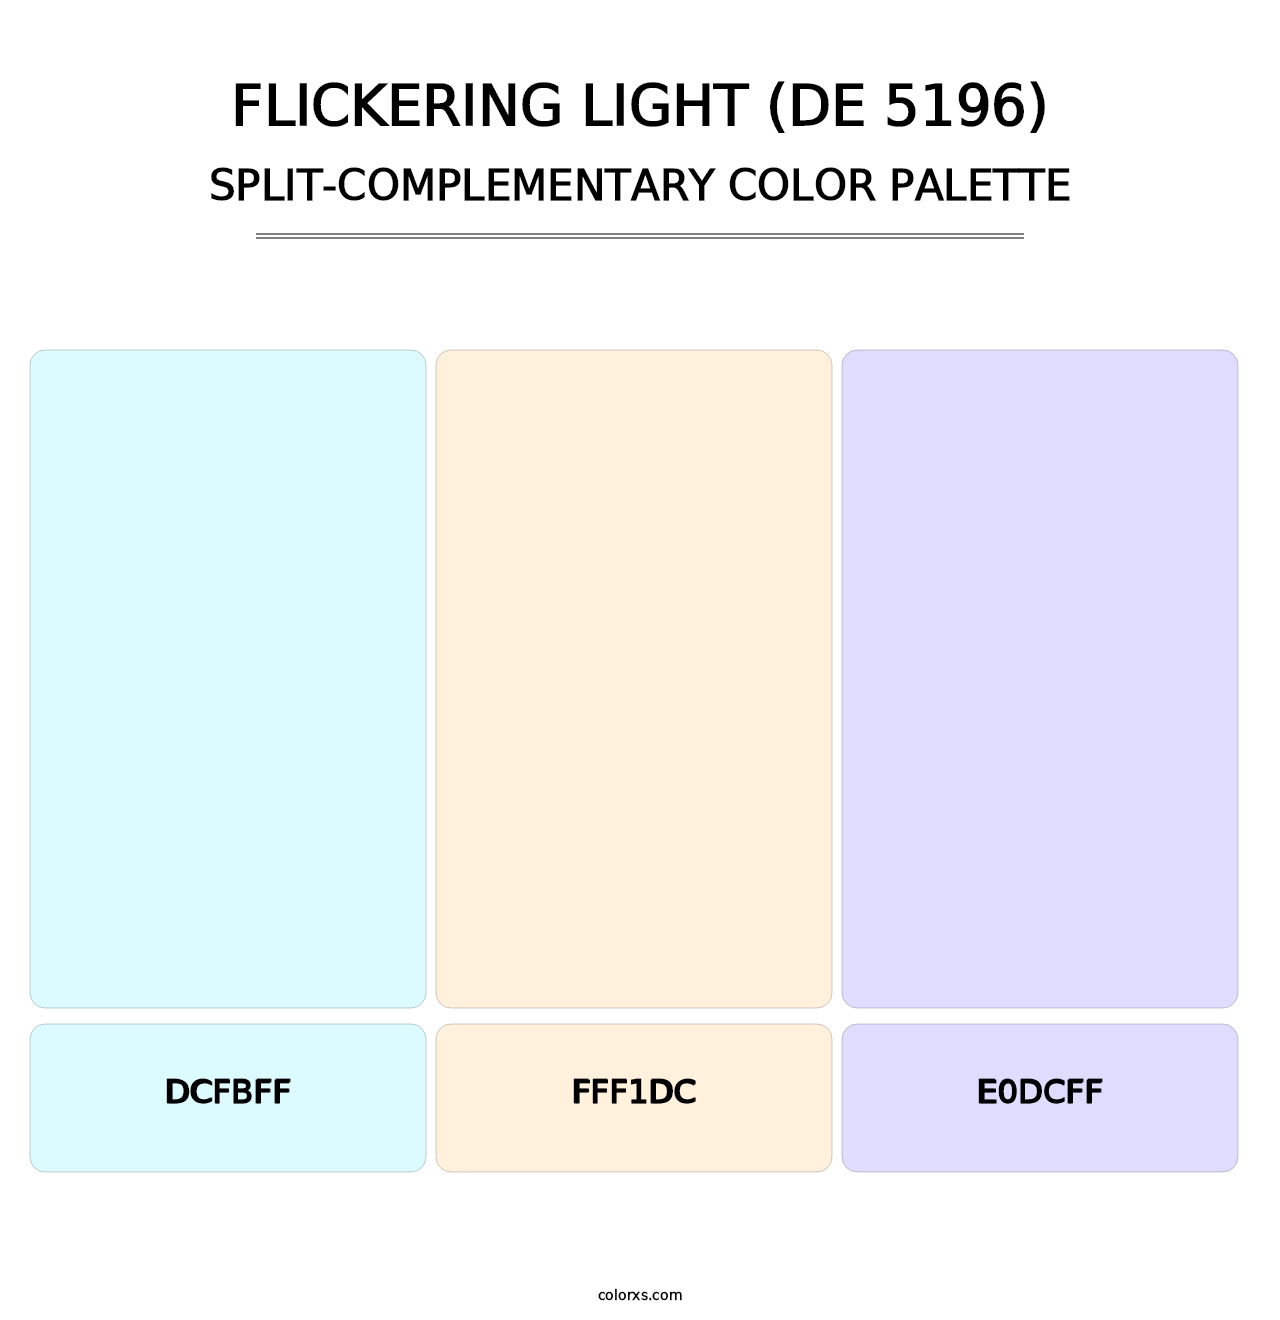 Flickering Light (DE 5196) - Split-Complementary Color Palette